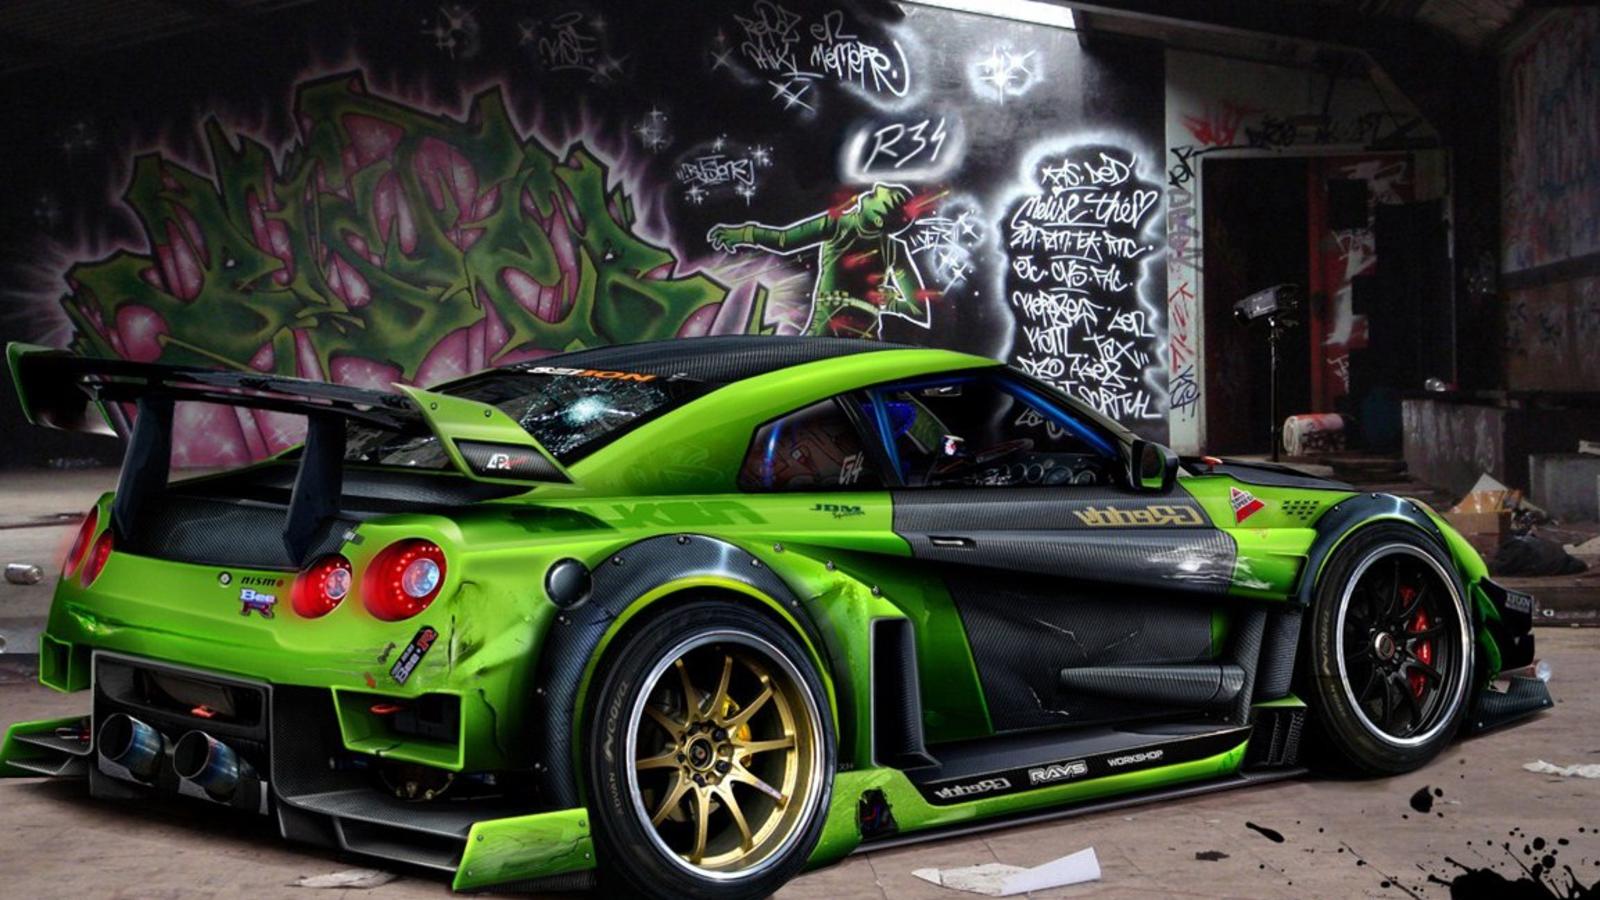 Free Wallpaper Downloads Green Car with Graffiti